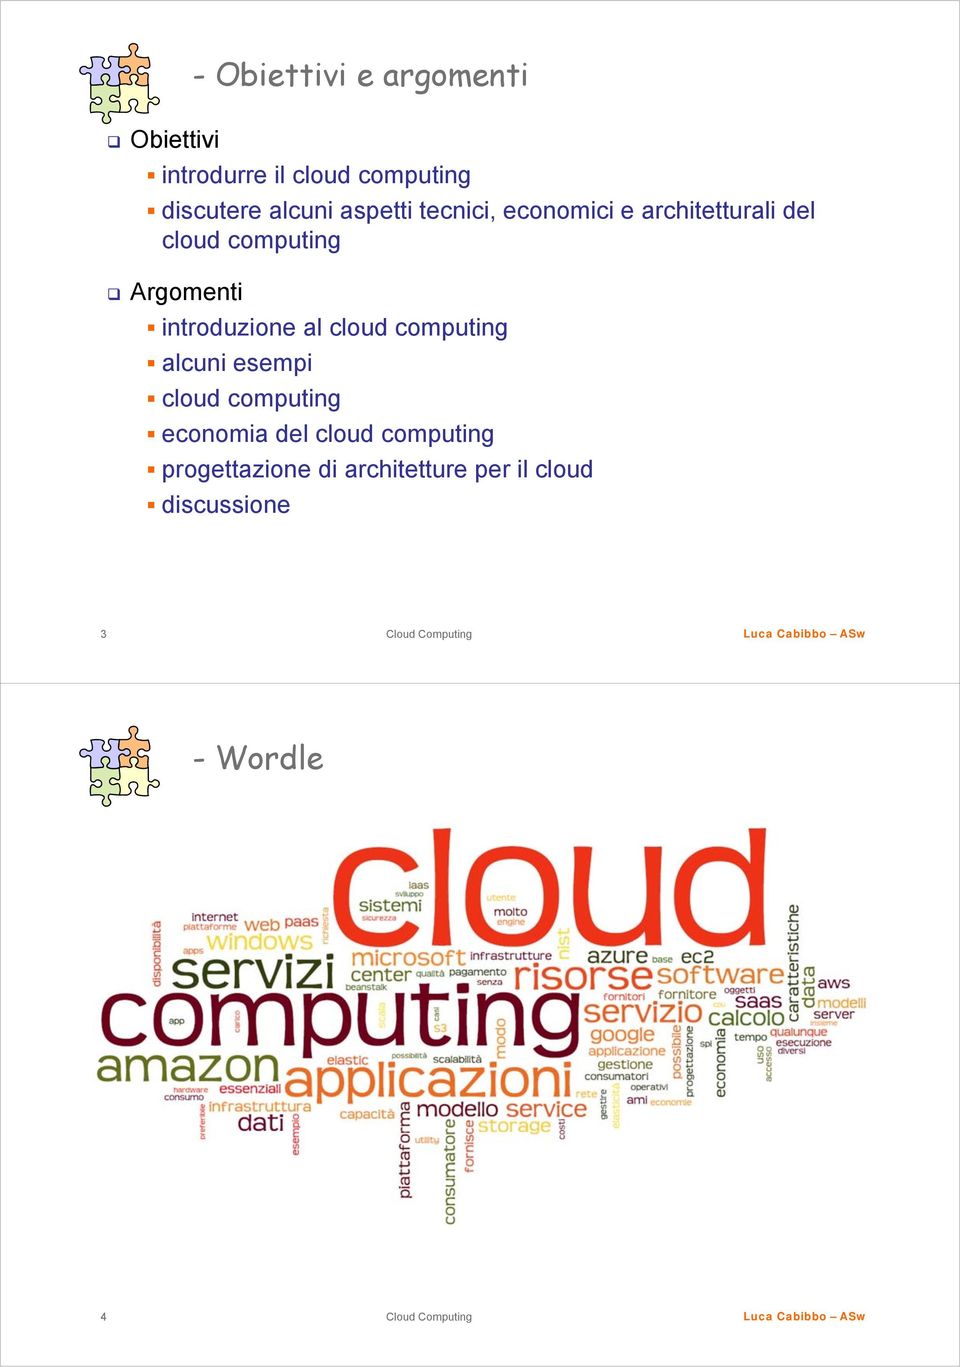 Argomenti introduzione al cloud computing alcuni esempi cloud computing